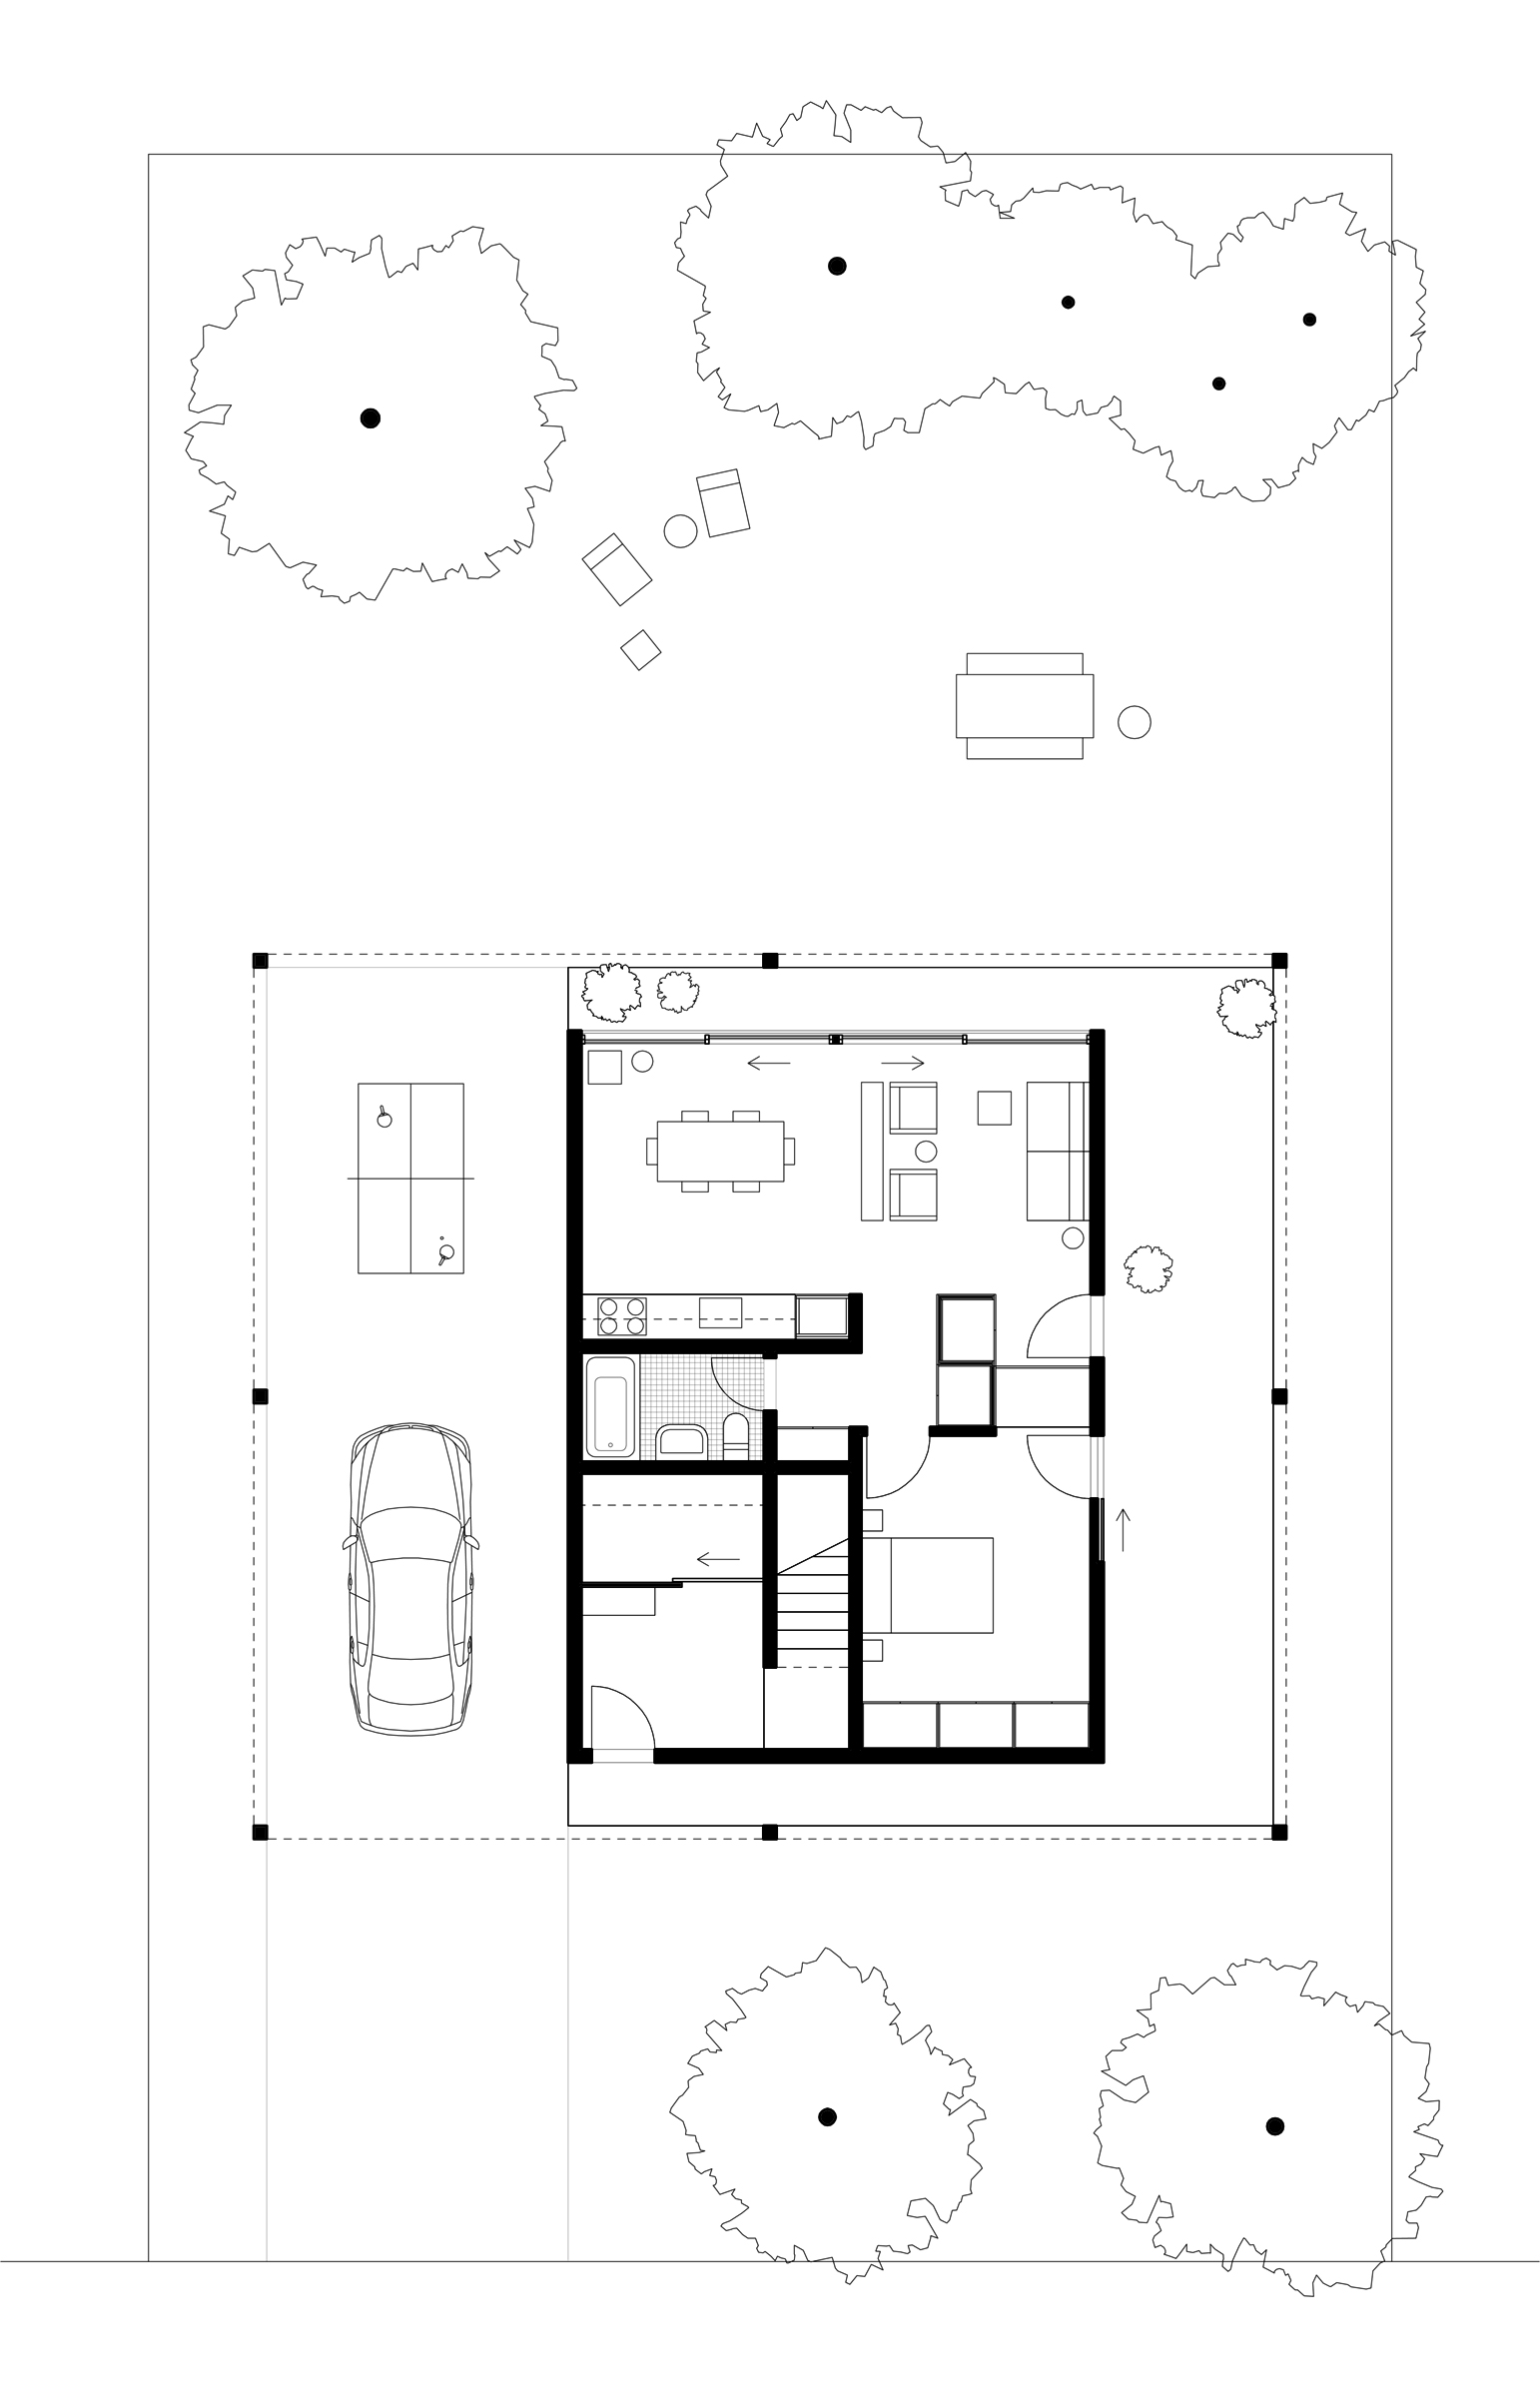 Alberta House. Ground floor plan